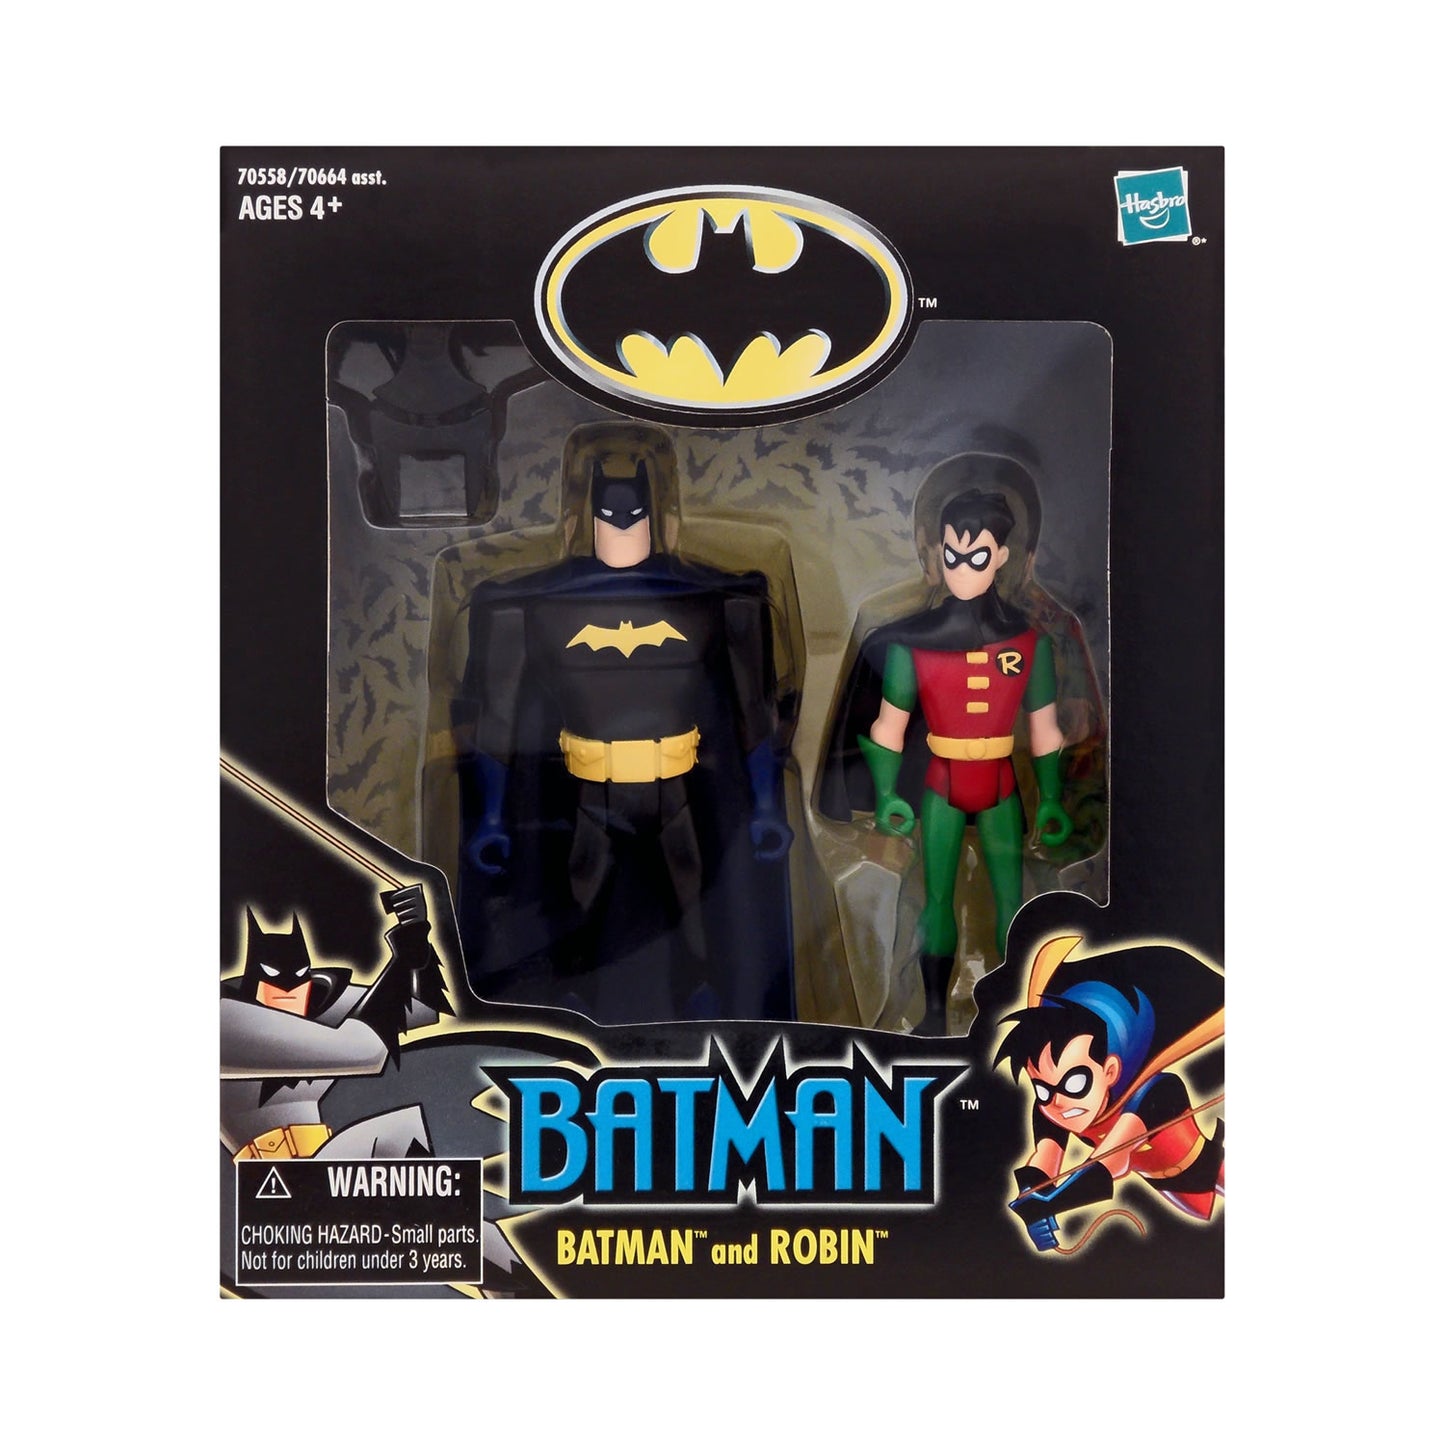 Wal-Mart Exclusive Batman and Robin